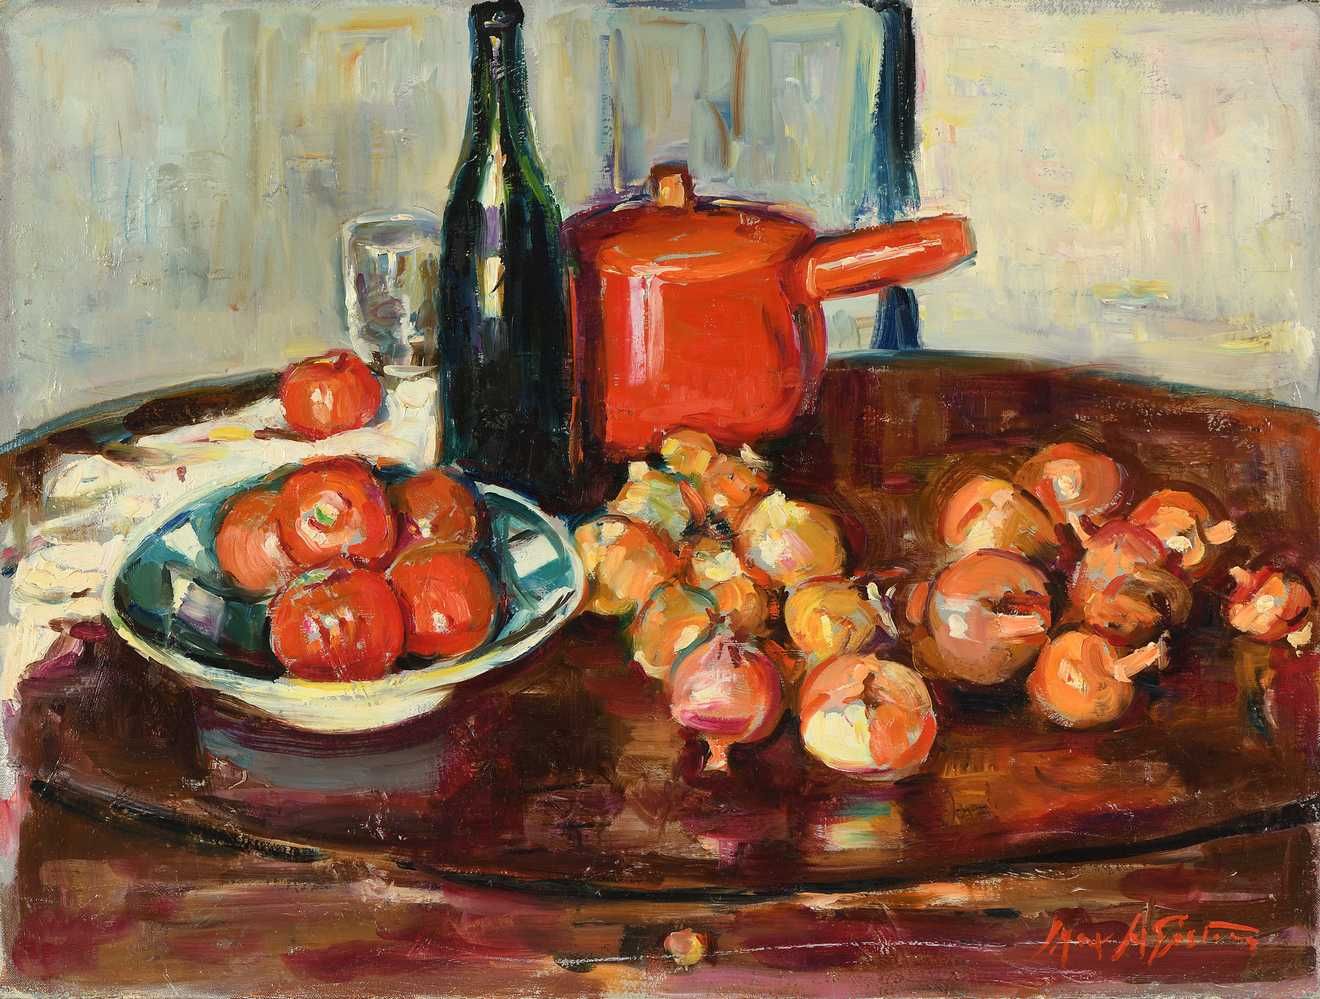 Null Max AGOSTINI (1914-1997) 静物与红罐 布面油画。右下方有签名。46 x 61 cm (A460)